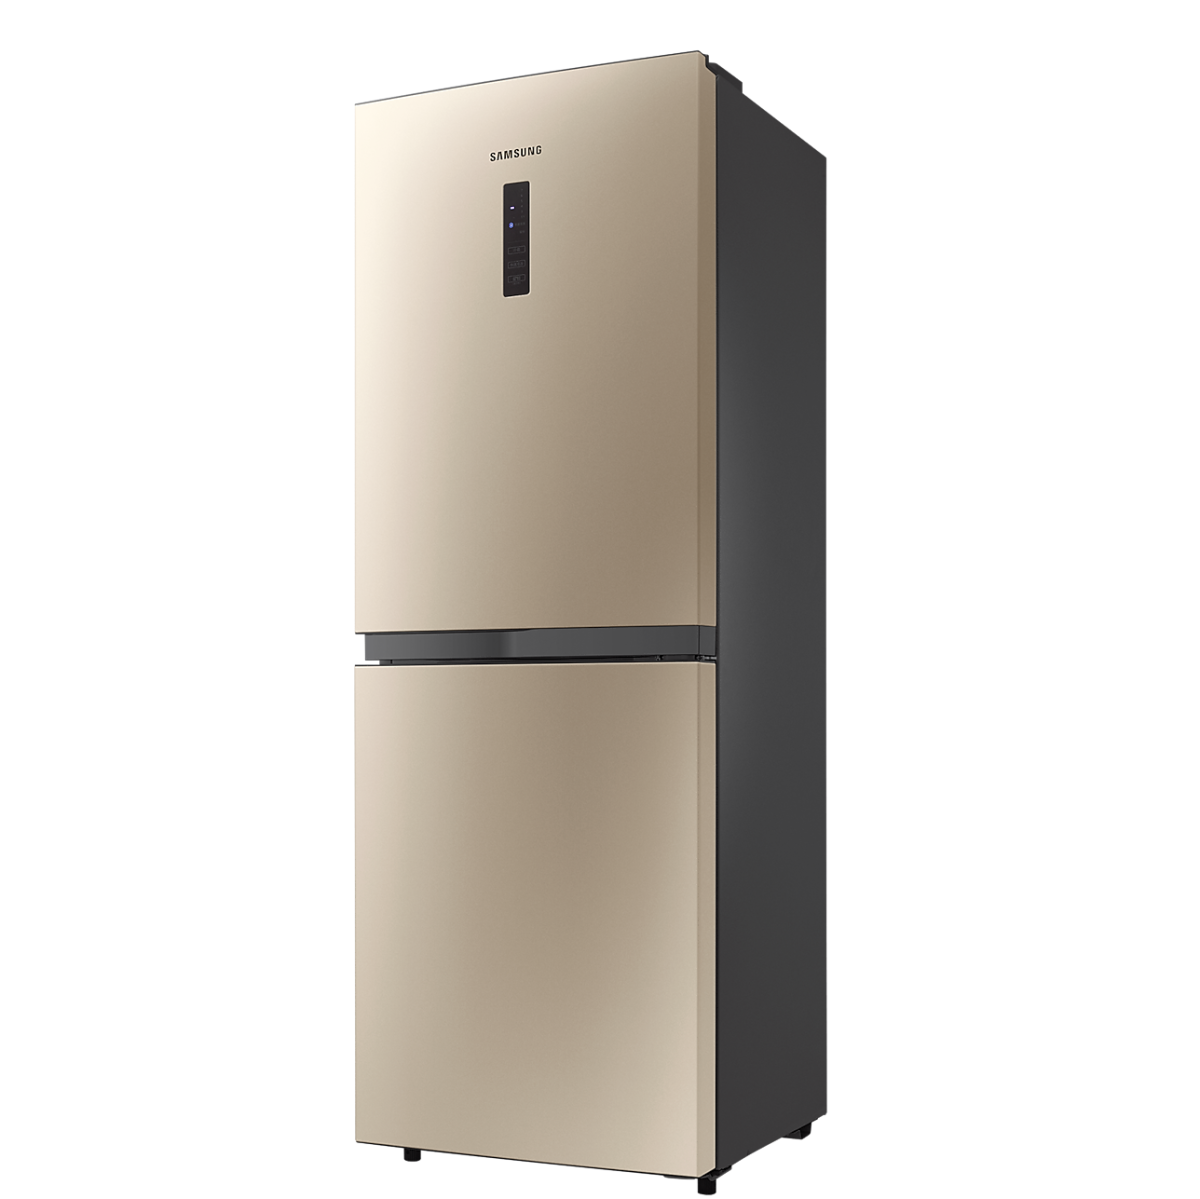 SAMSUNG 218 Liter Refrigerator with Digtial Inverter Technology RB21KMFH5SK/D3 , Best Refrigerators of Year, Top-rated Refrigerators, Refrigerator Reviews, Refrigerator Comparison, Buying a Refrigerator Guide, Refrigerator Deals and Offers Best Refrigerators of Year, Top-rated Refrigerators, Refrigerator Reviews, Refrigerator Comparison, Buying a Refrigerator Guide, Refrigerator Deals and Offers, Best refrigerators in Chittagong, Best selling refrigerators in Chittagong, Best Electronics Store in Chittagong, Meem Electronics, MeemElectronics, Best Deal of Refrigerator, SAMSUNG Refrigerator price in Chittagong, SAMSUNG Refrigerator price in Bangladersh, 218 Liter Refrigerator, SAMSUNG Refrigerator, 01919382008, 01919382009, 019193820010